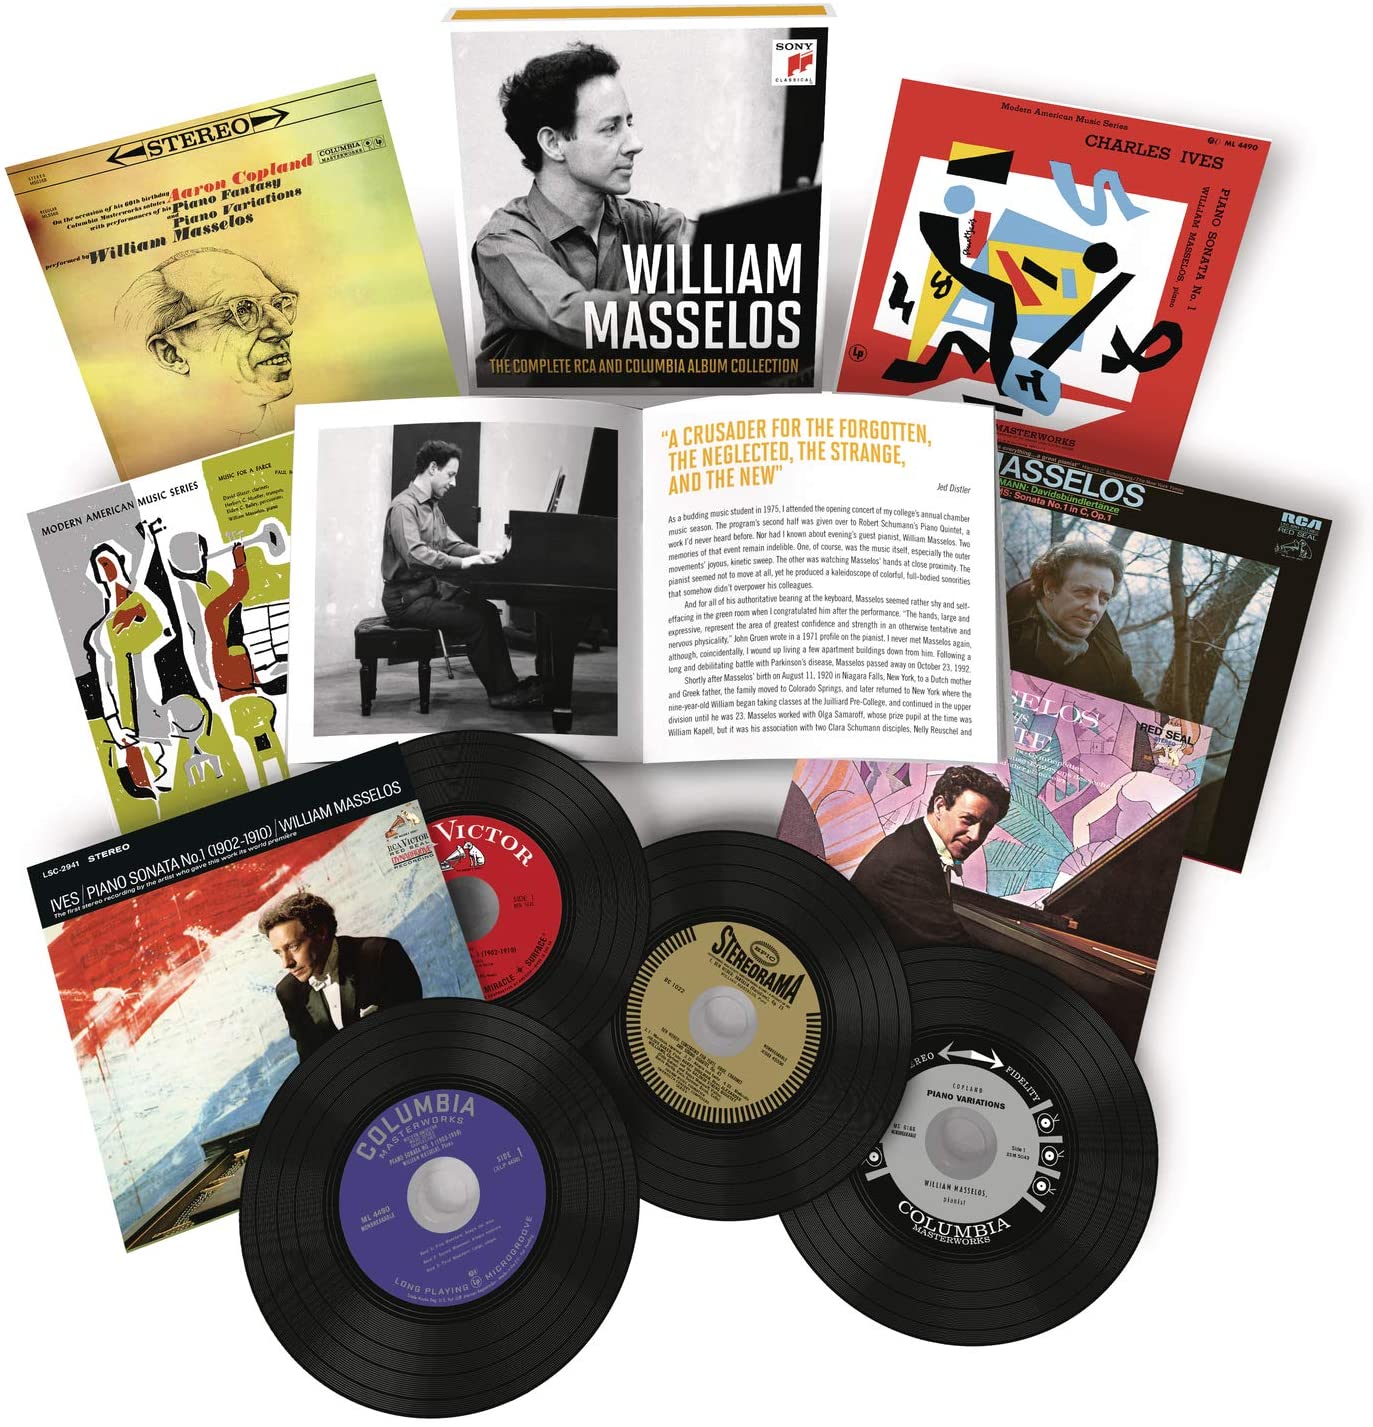  William Masselos - The Complete Rca And Columbia Album Collection | William Masselos image0